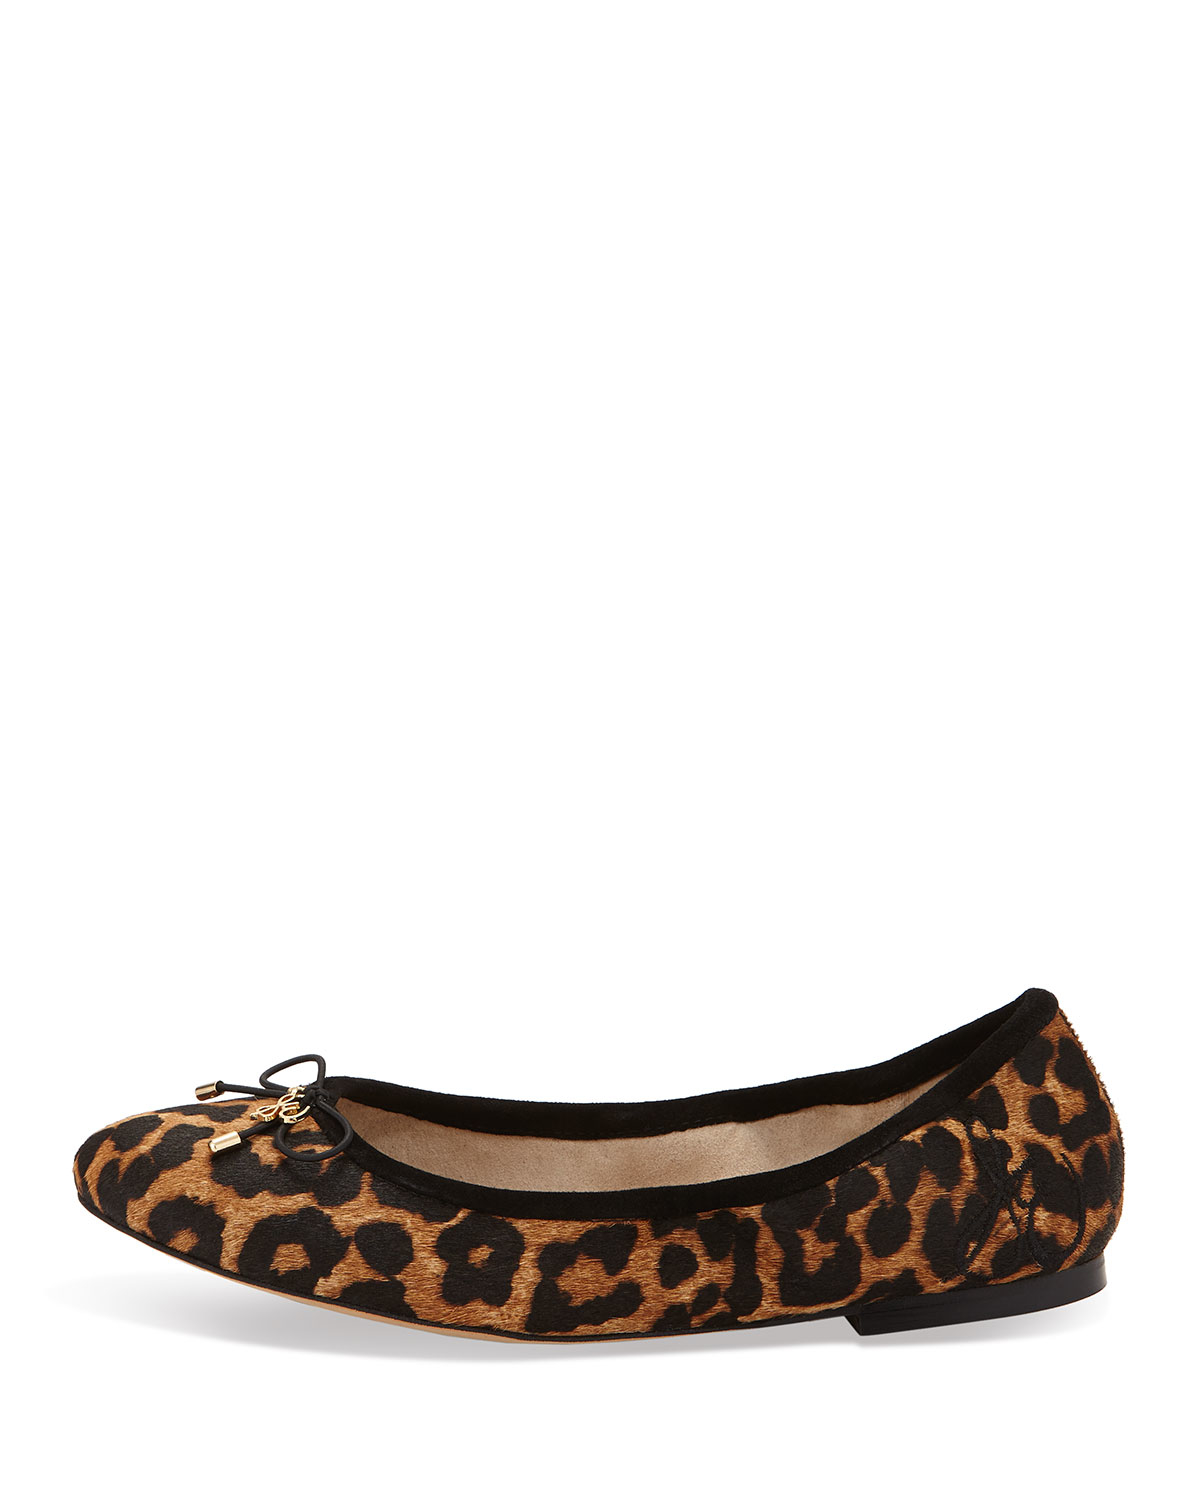 Sam edelman Felicia Leopard-Print Ballerina Flat in Brown (leopard) | Lyst